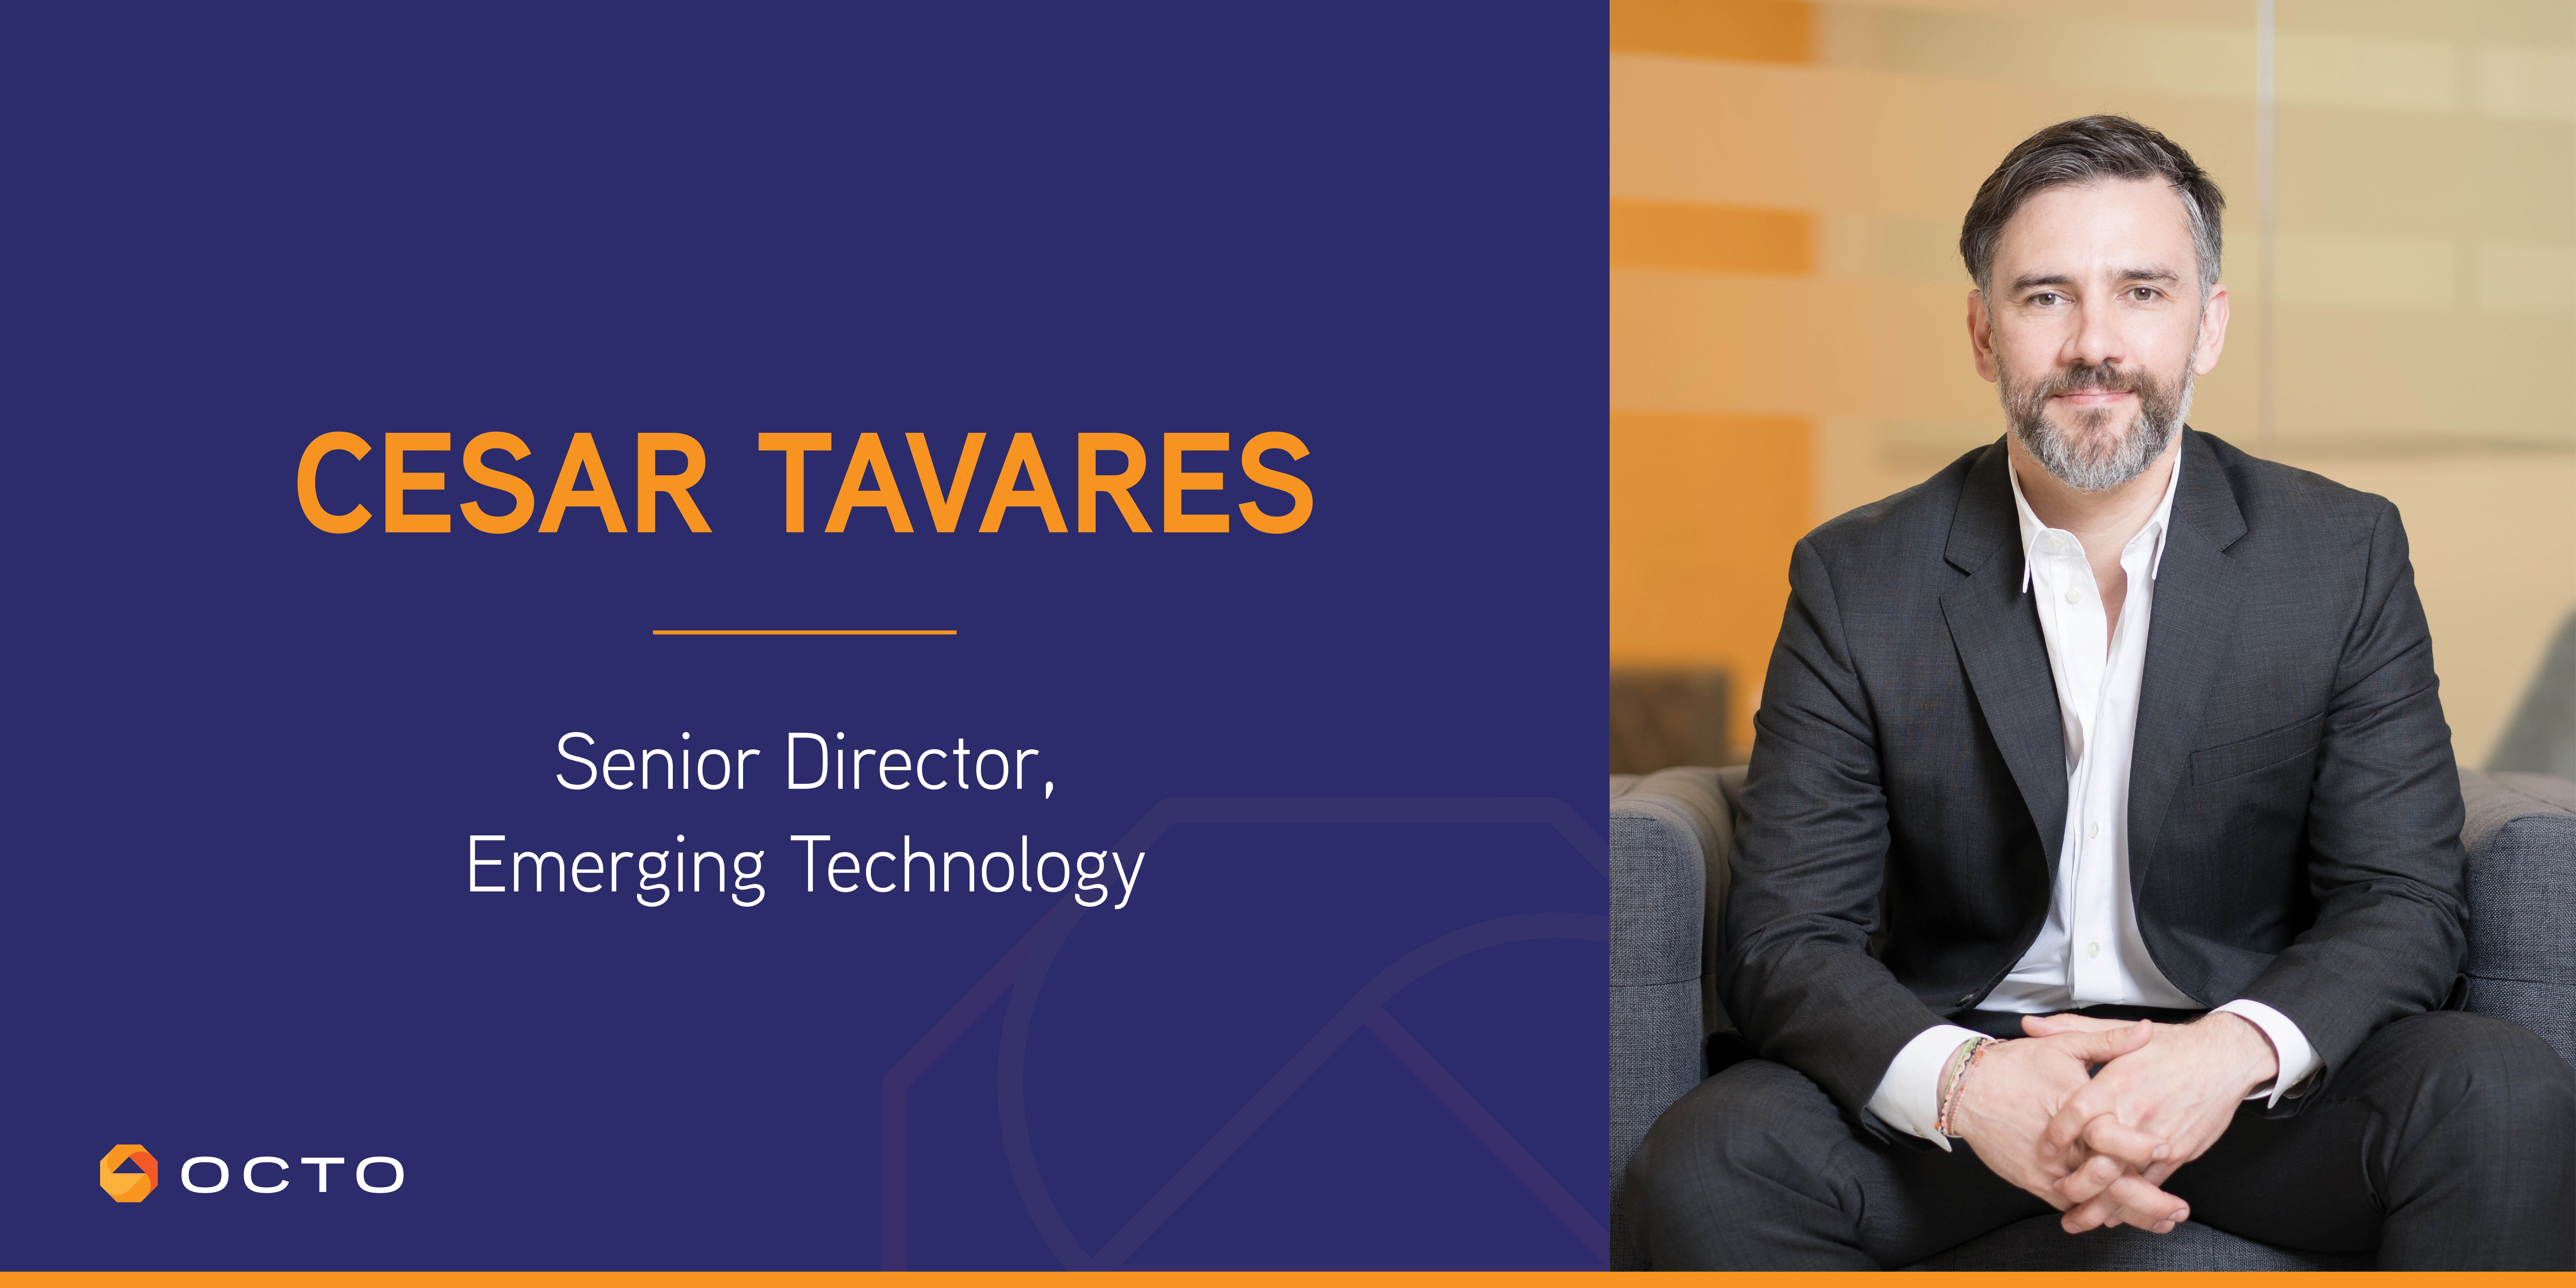 Cesar Tavares - Senior Director, Emerging Technology